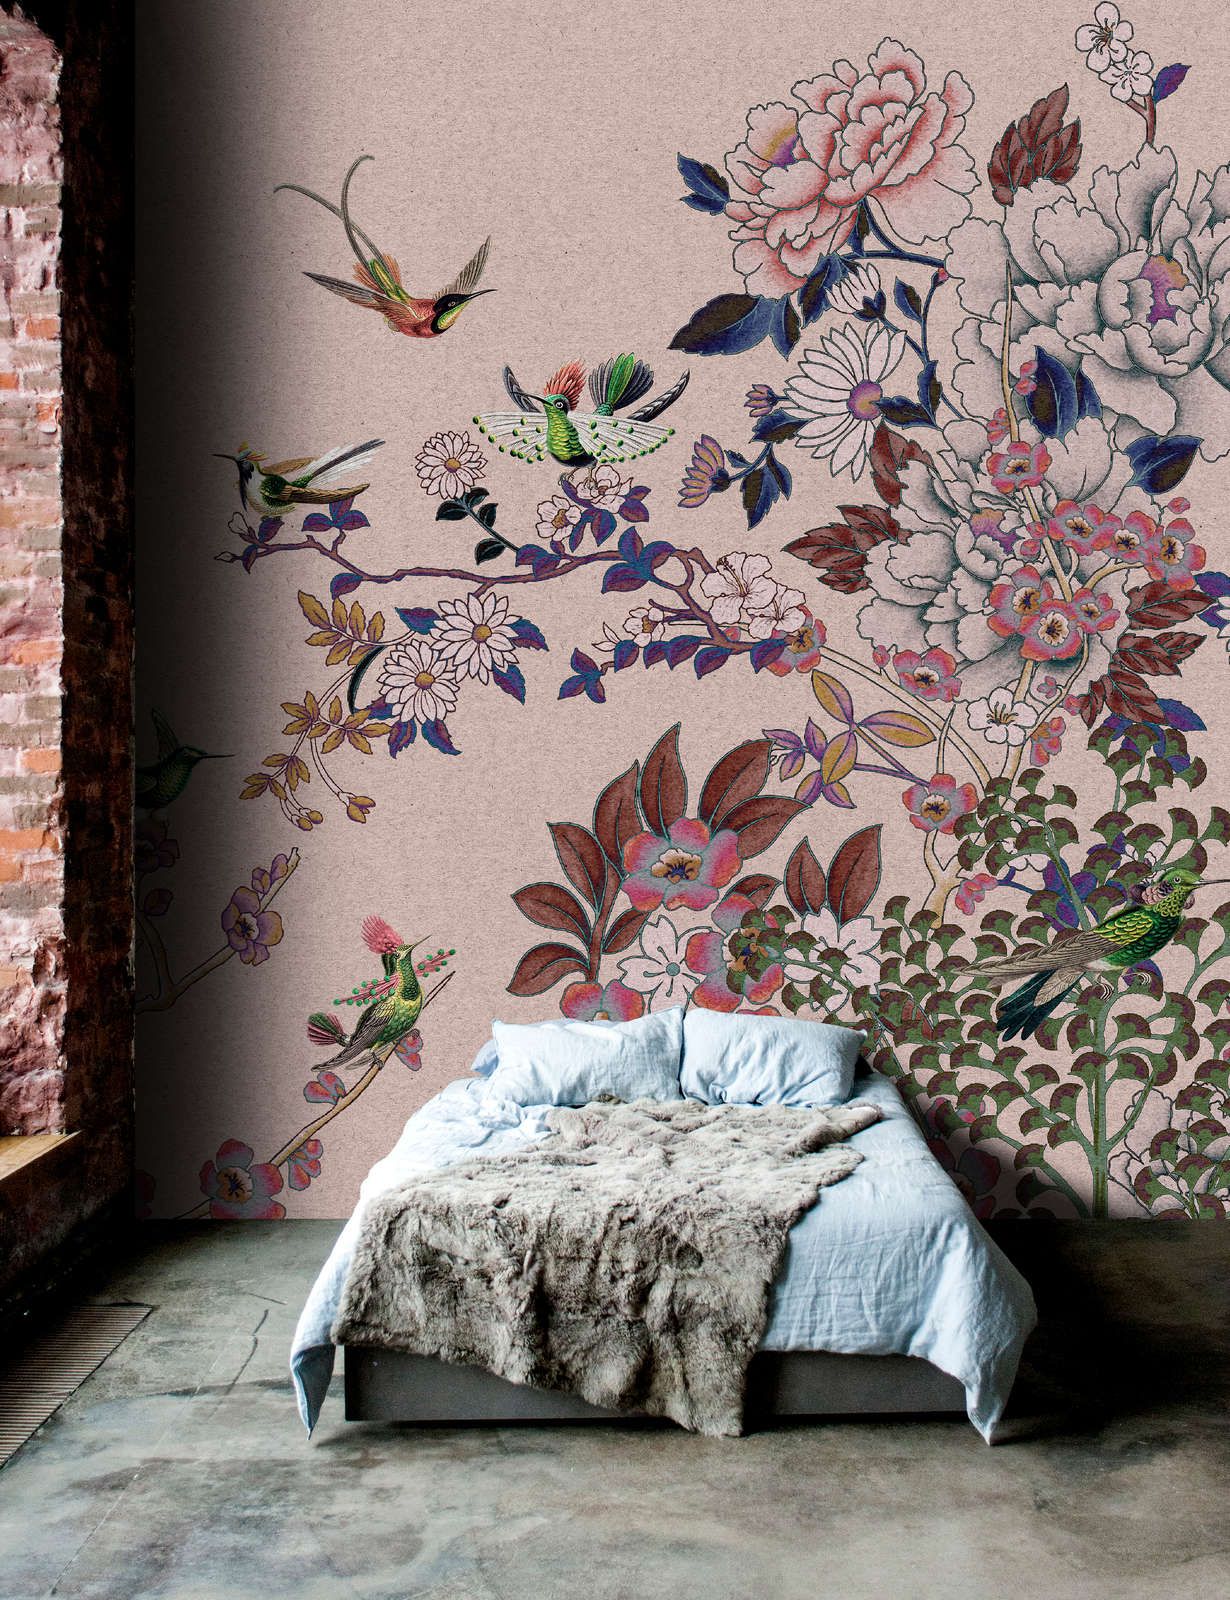             Fotomural »madras 2« - Motivo floral de color rosa con colibríes sobre textura de papel kraft - Tela no tejida de textura ligera
        